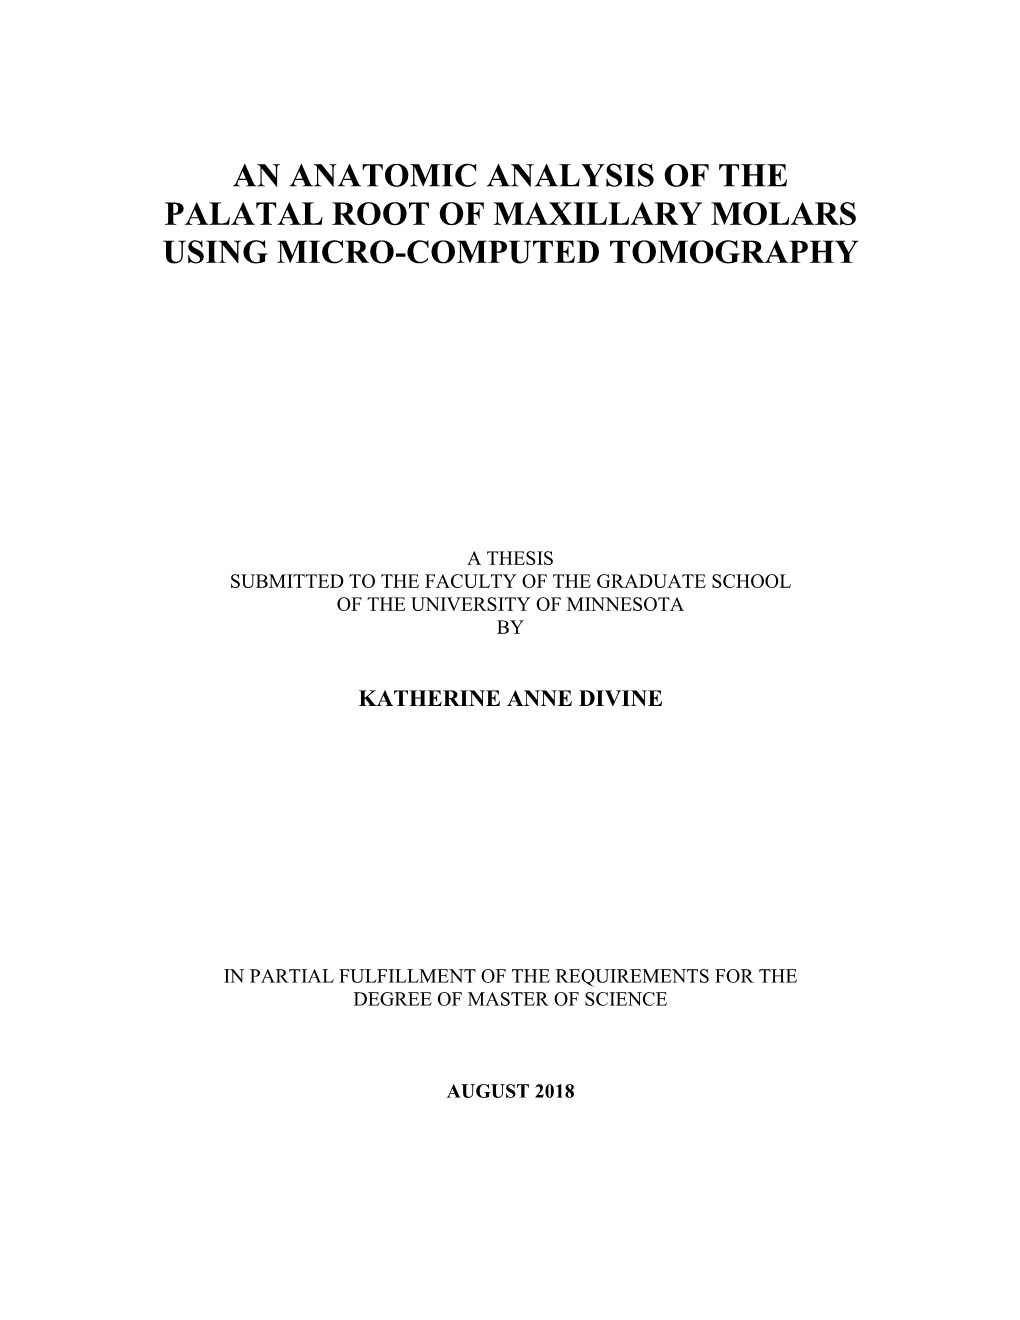 An Anatomic Analysis of the Palatal Root of Maxillary Molars Using Micro-Computed Tomography